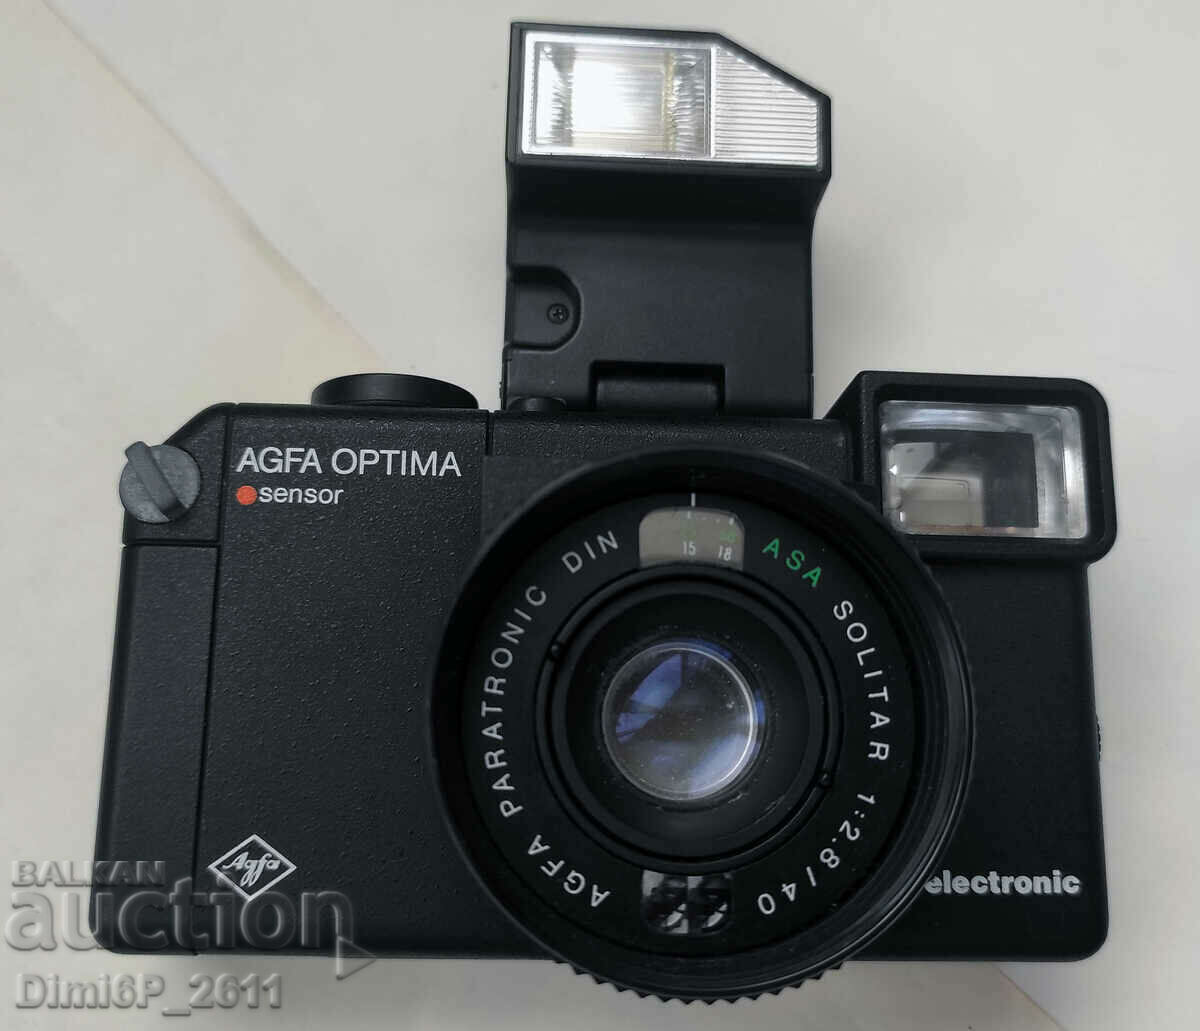 Agfa Optima electronic camera